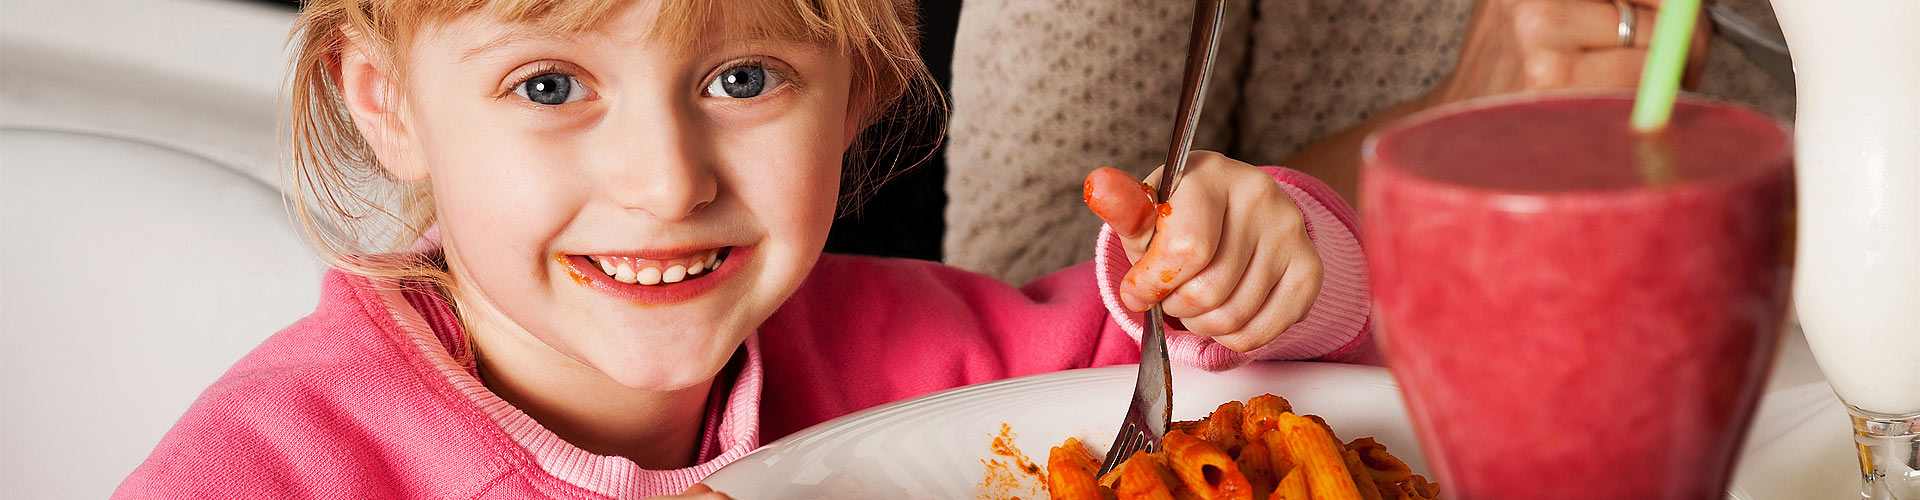 Restaurantes baratos para ir con niños en Alcobendas